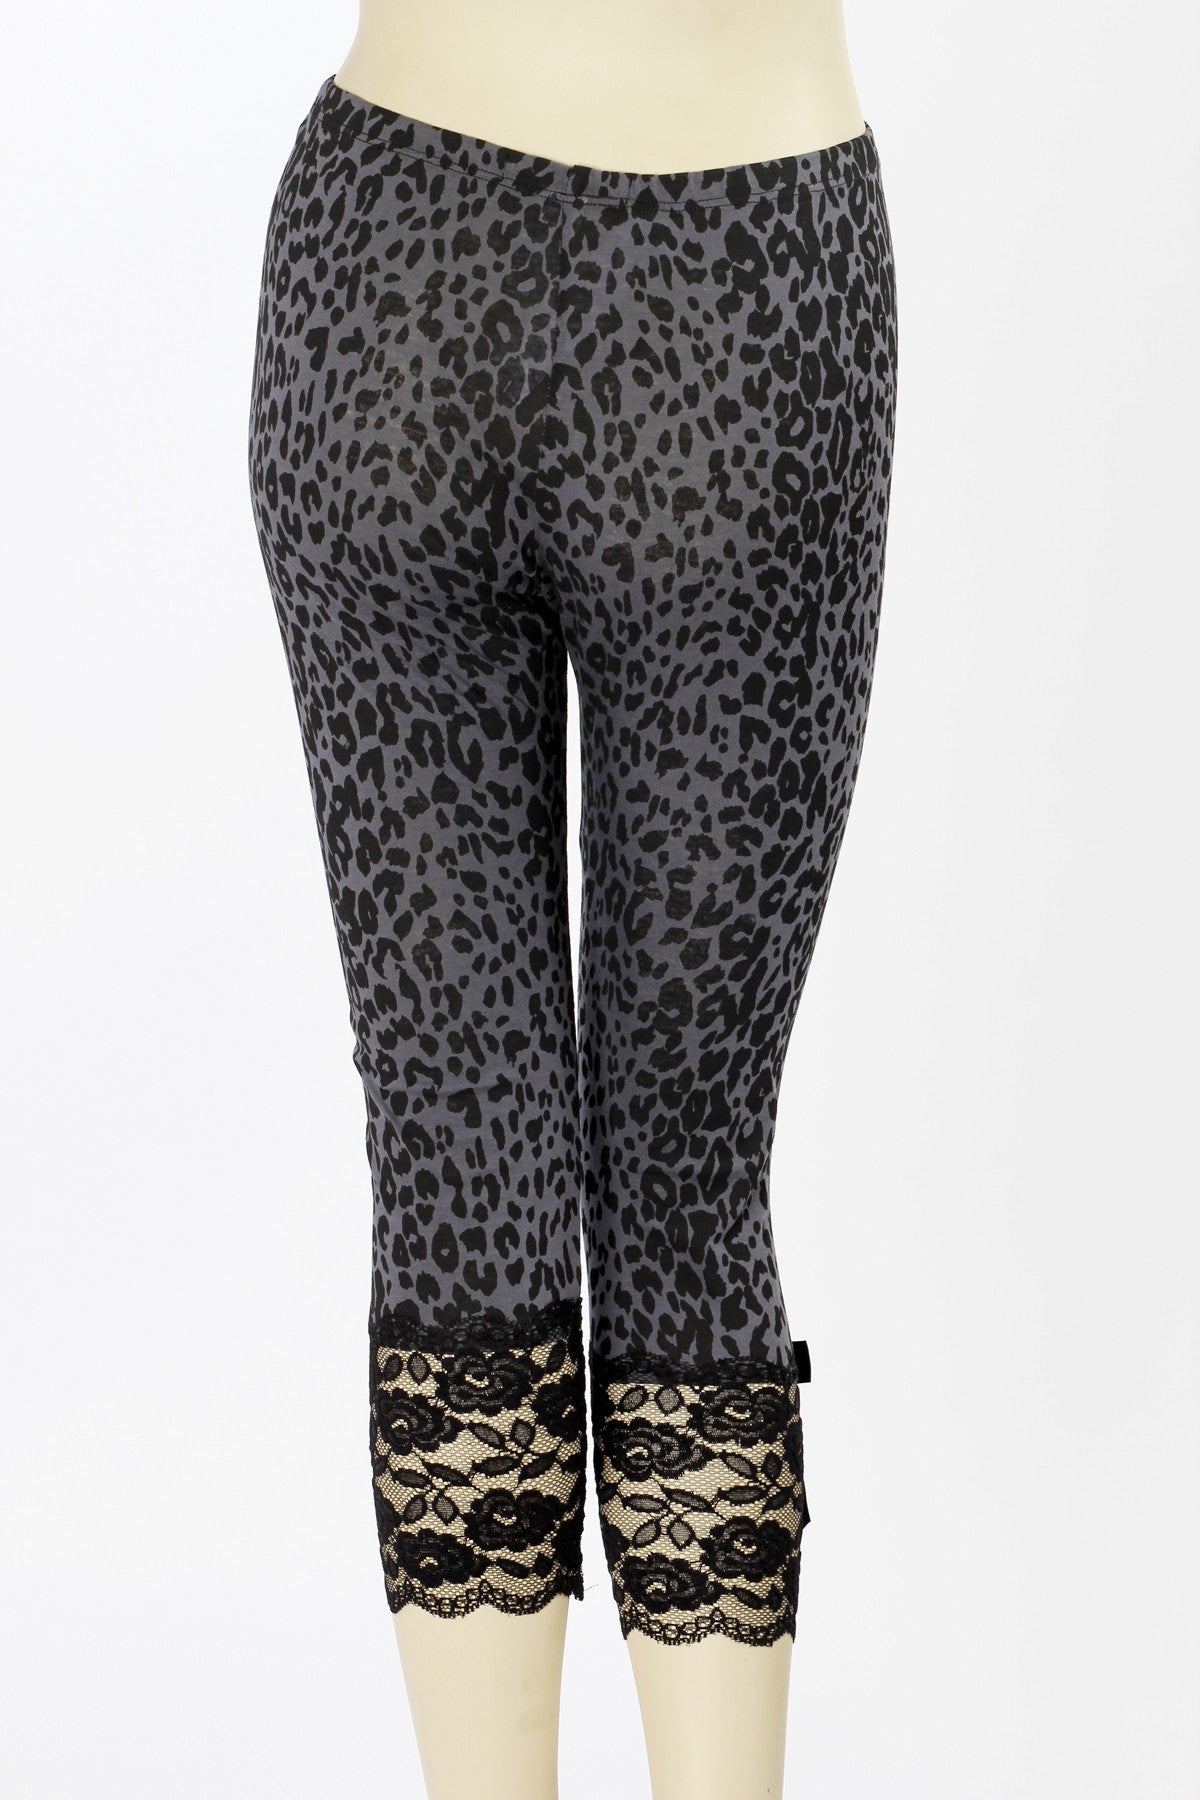 Buy Black Leopard Print Leggings for Women Online – FIT & FEARLESS